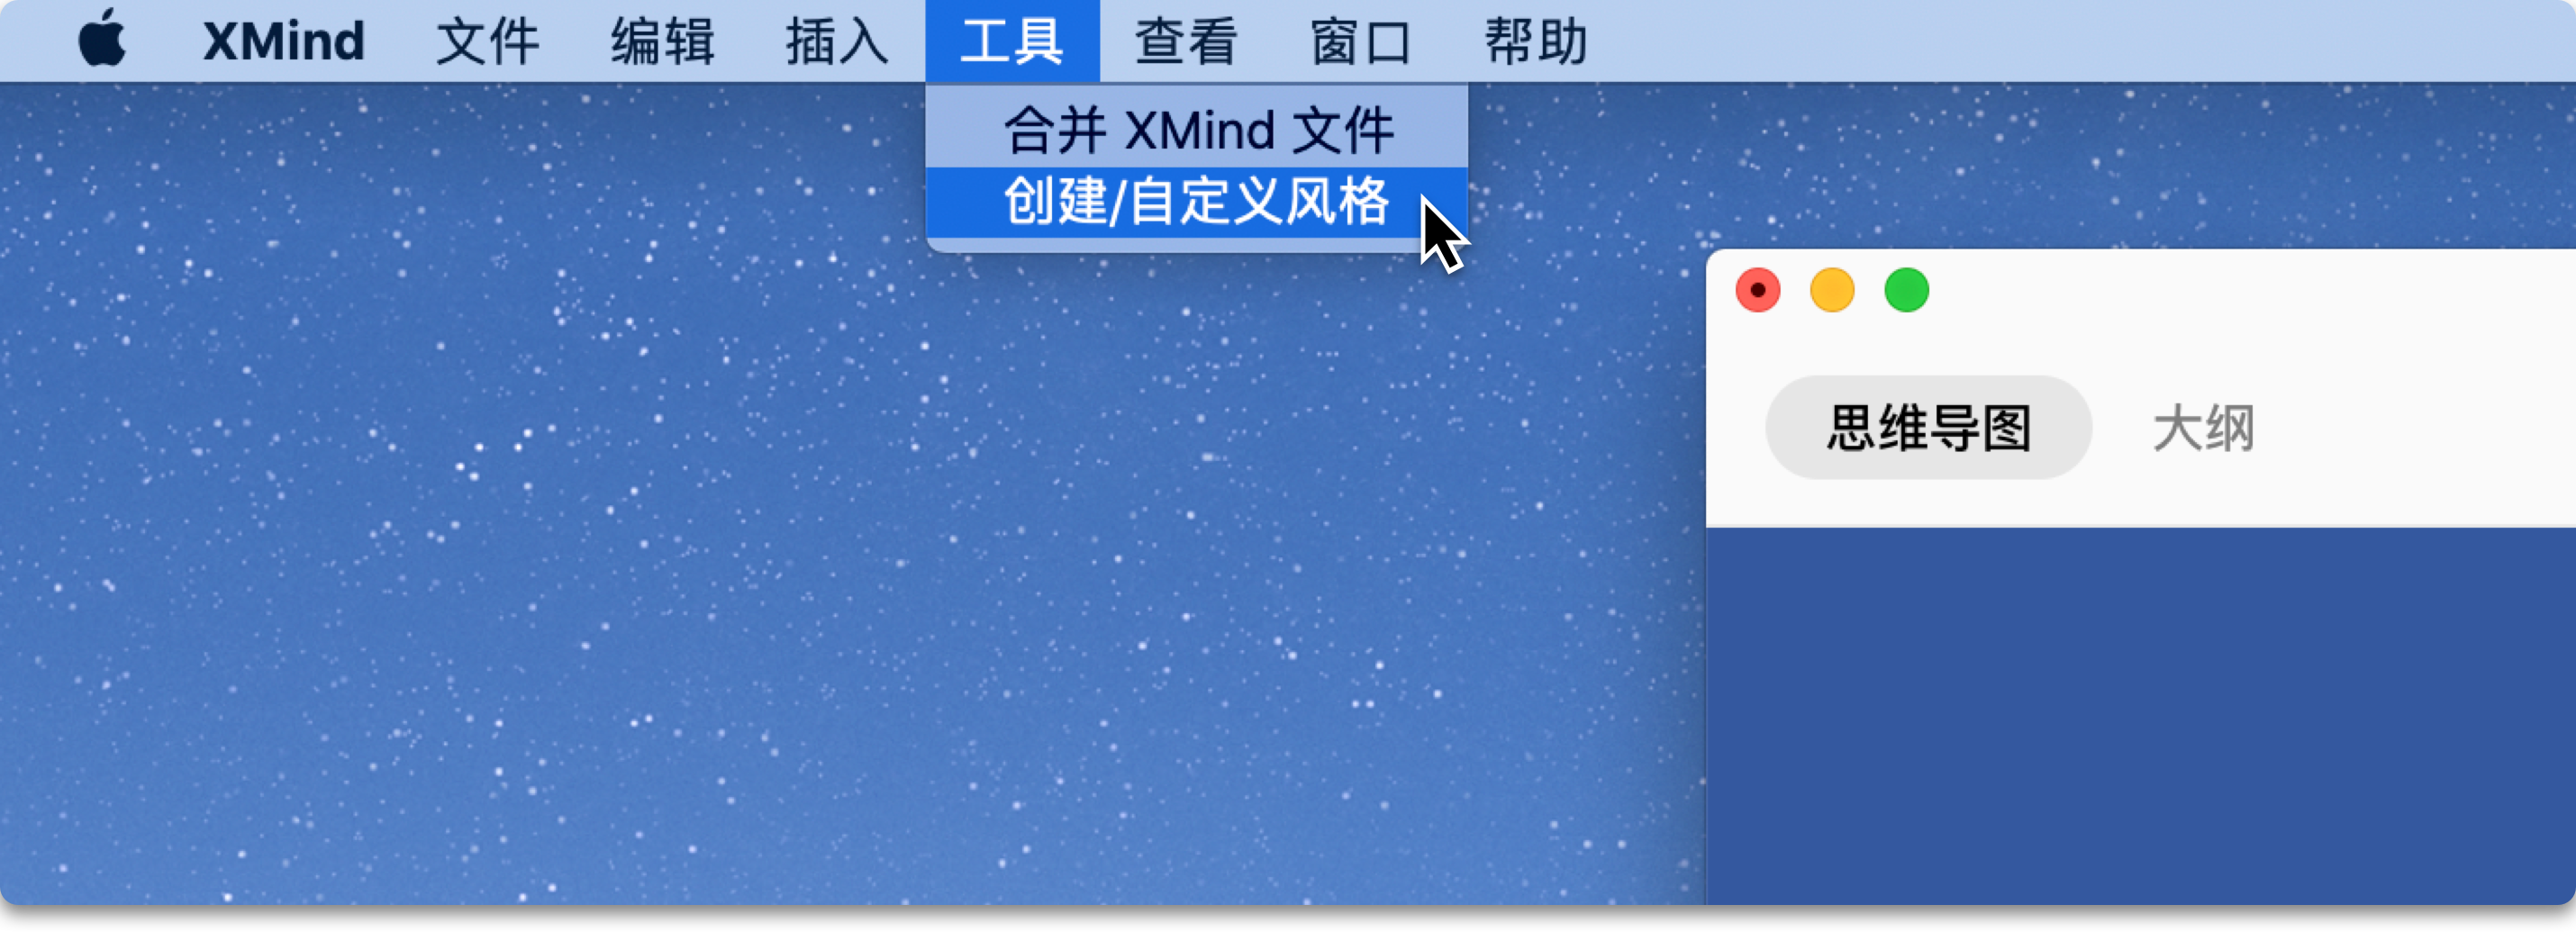 Xmind for Win&Mac 完美激活版及使用教程_xmind for mac_03